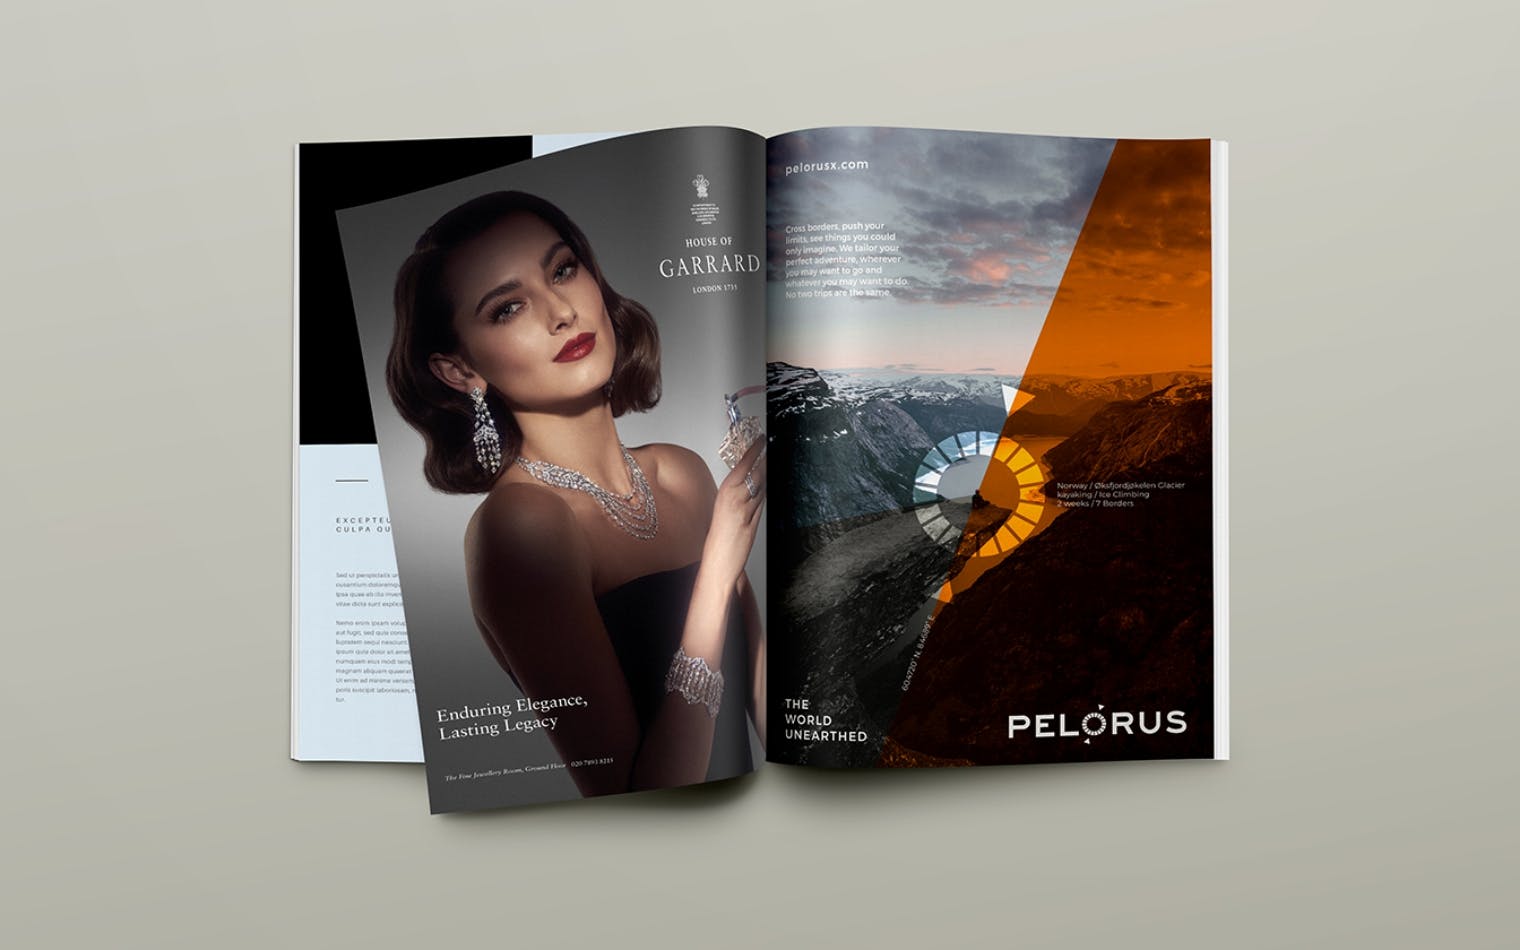 Pelorus | Steve Edge Design